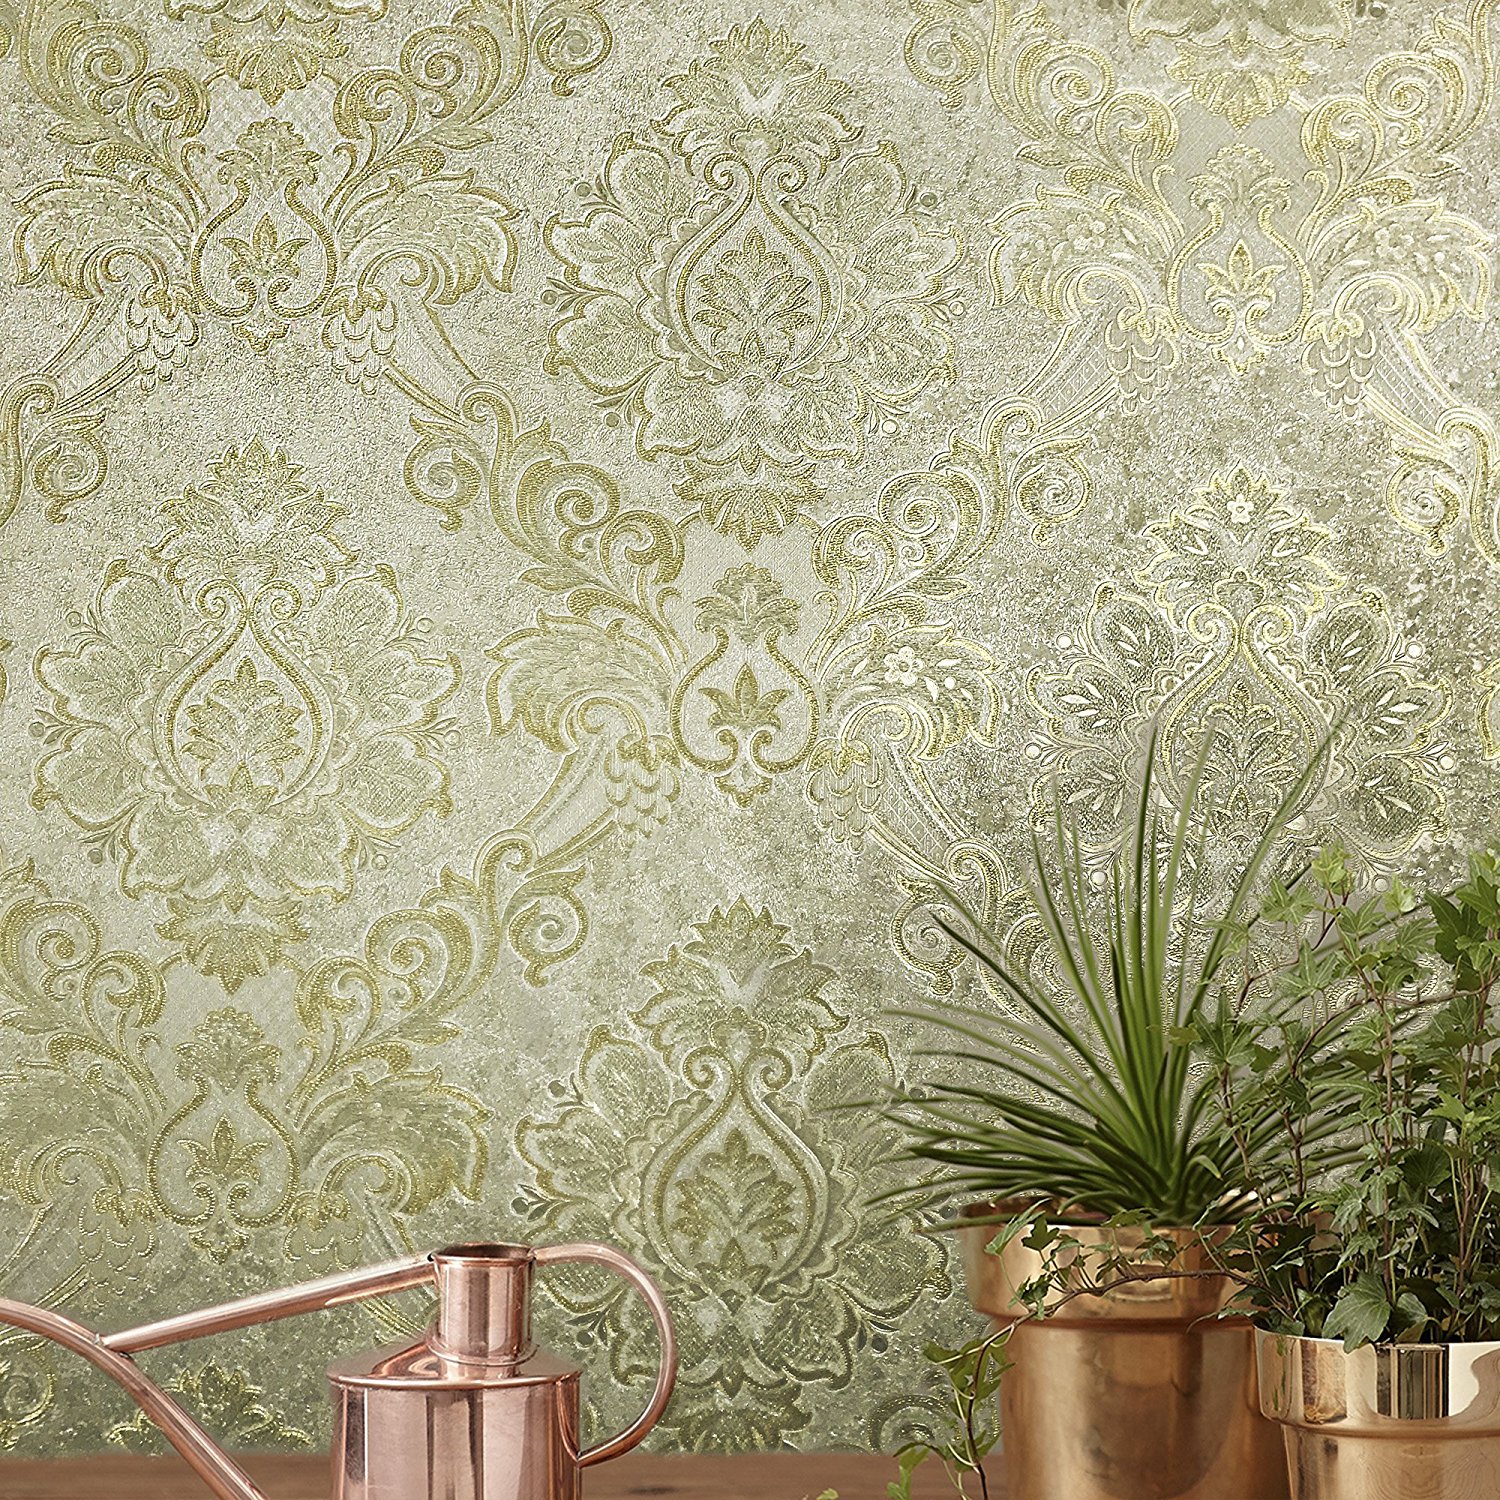 Metallic Texture Design Of Wall - HD Wallpaper 